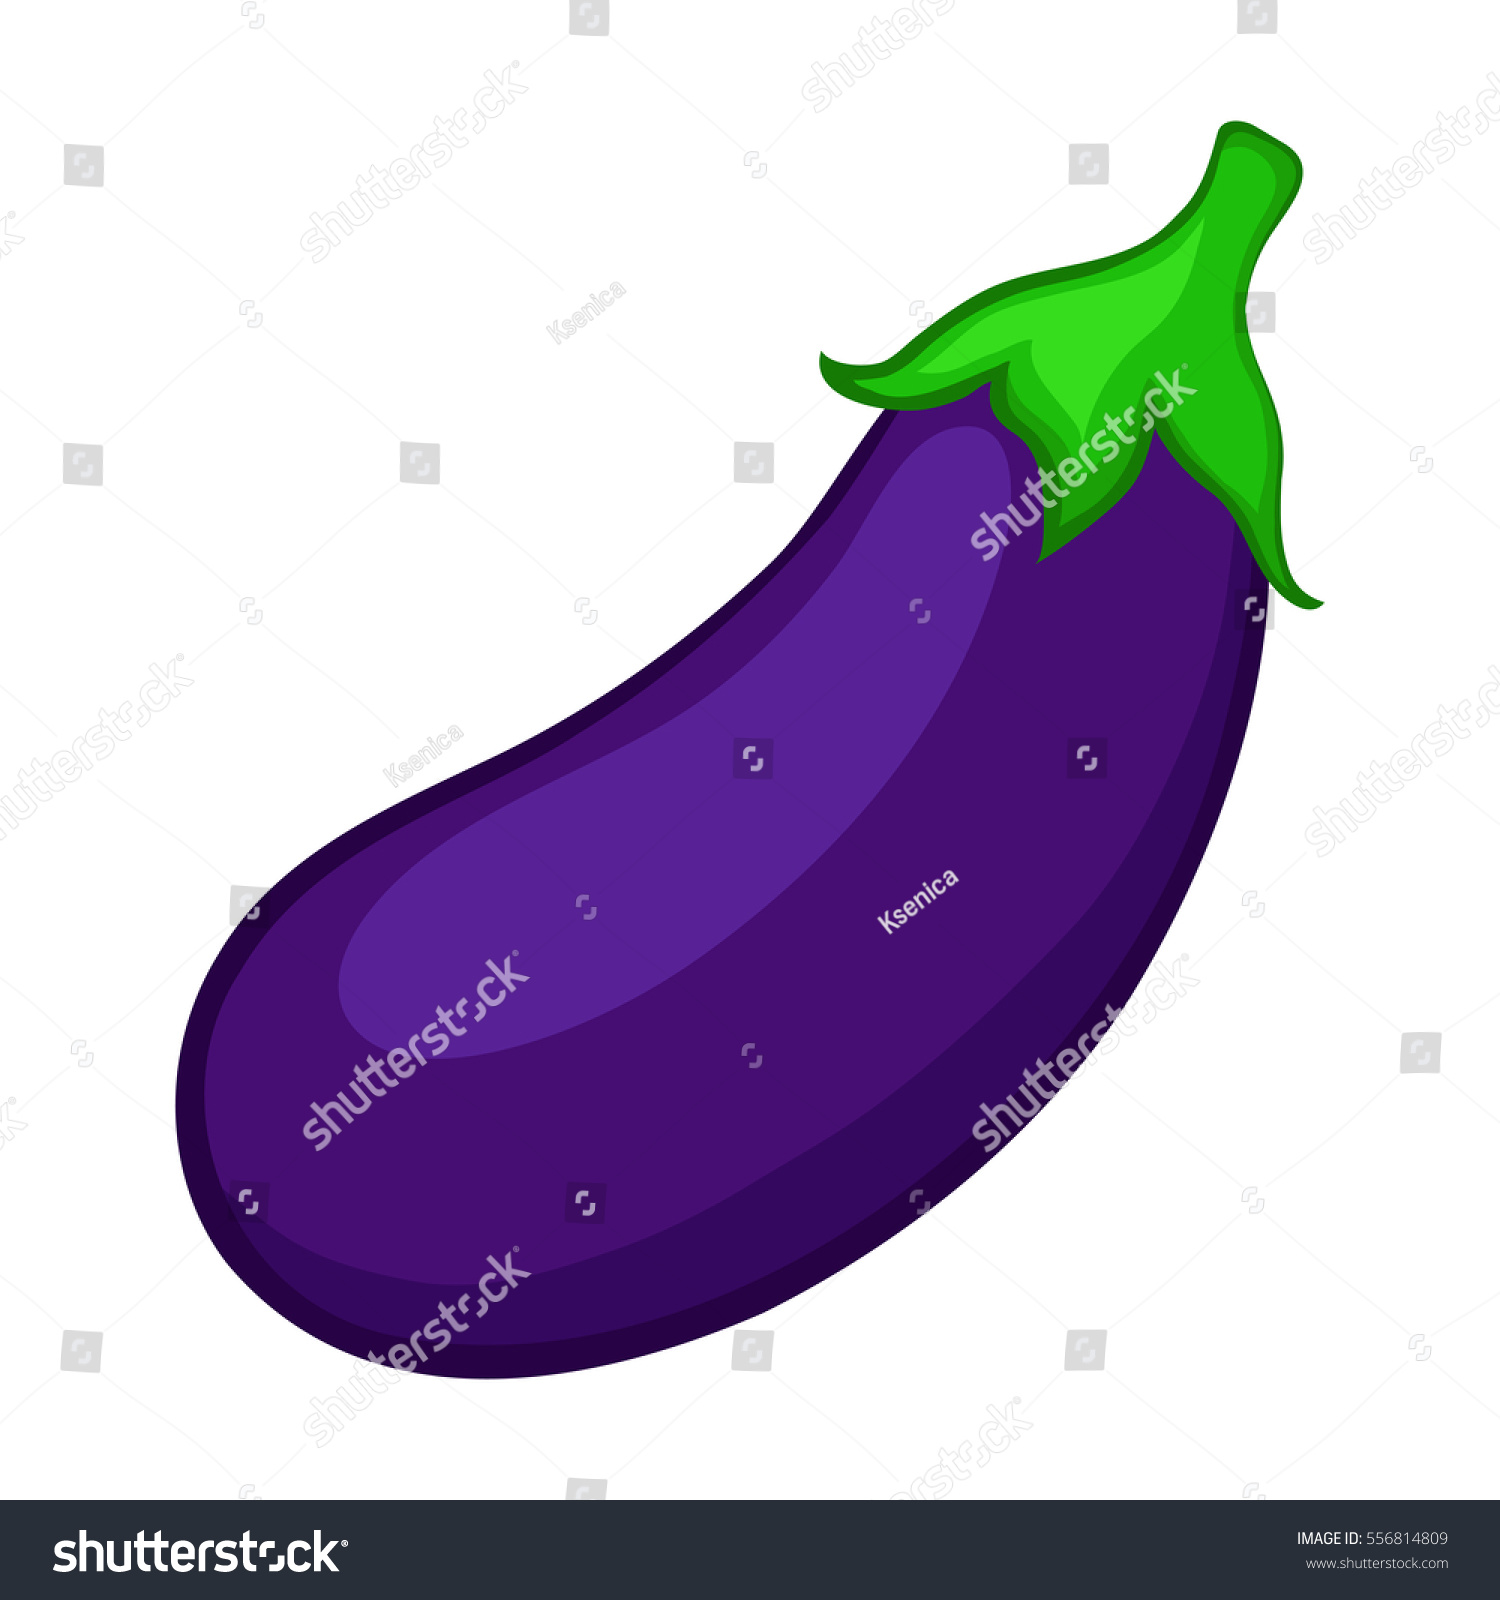 Eggplant Isolated On White Background Cartoon Stock Vector 556814809